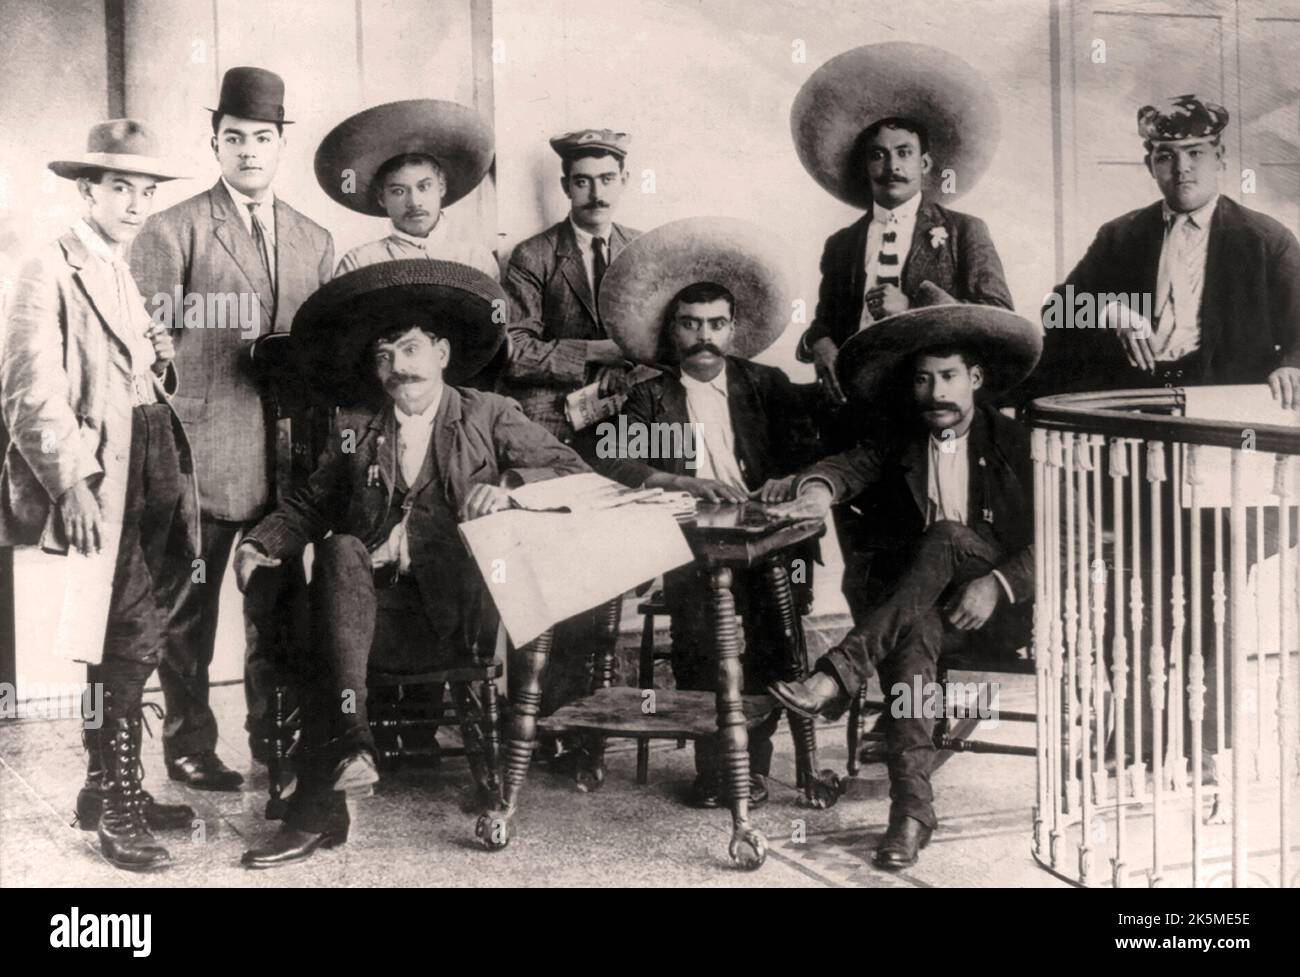 Emiliano Zapata Salazar (1879-1919), leader of the Mexican Revolution (1910-1920). From left to right: Tirso Espinosa, Gildardo Magaña, M. Mejía, Abram Martínez, Jesús Jauregui and Rodolfo Magaña; seated: Eufemio Zapata (Emiliano's brother), Emiliano Zapata and Próculo Capistrán. They are at Hotel Coliseo, Mexico City on June 24, 1911 Stock Photo